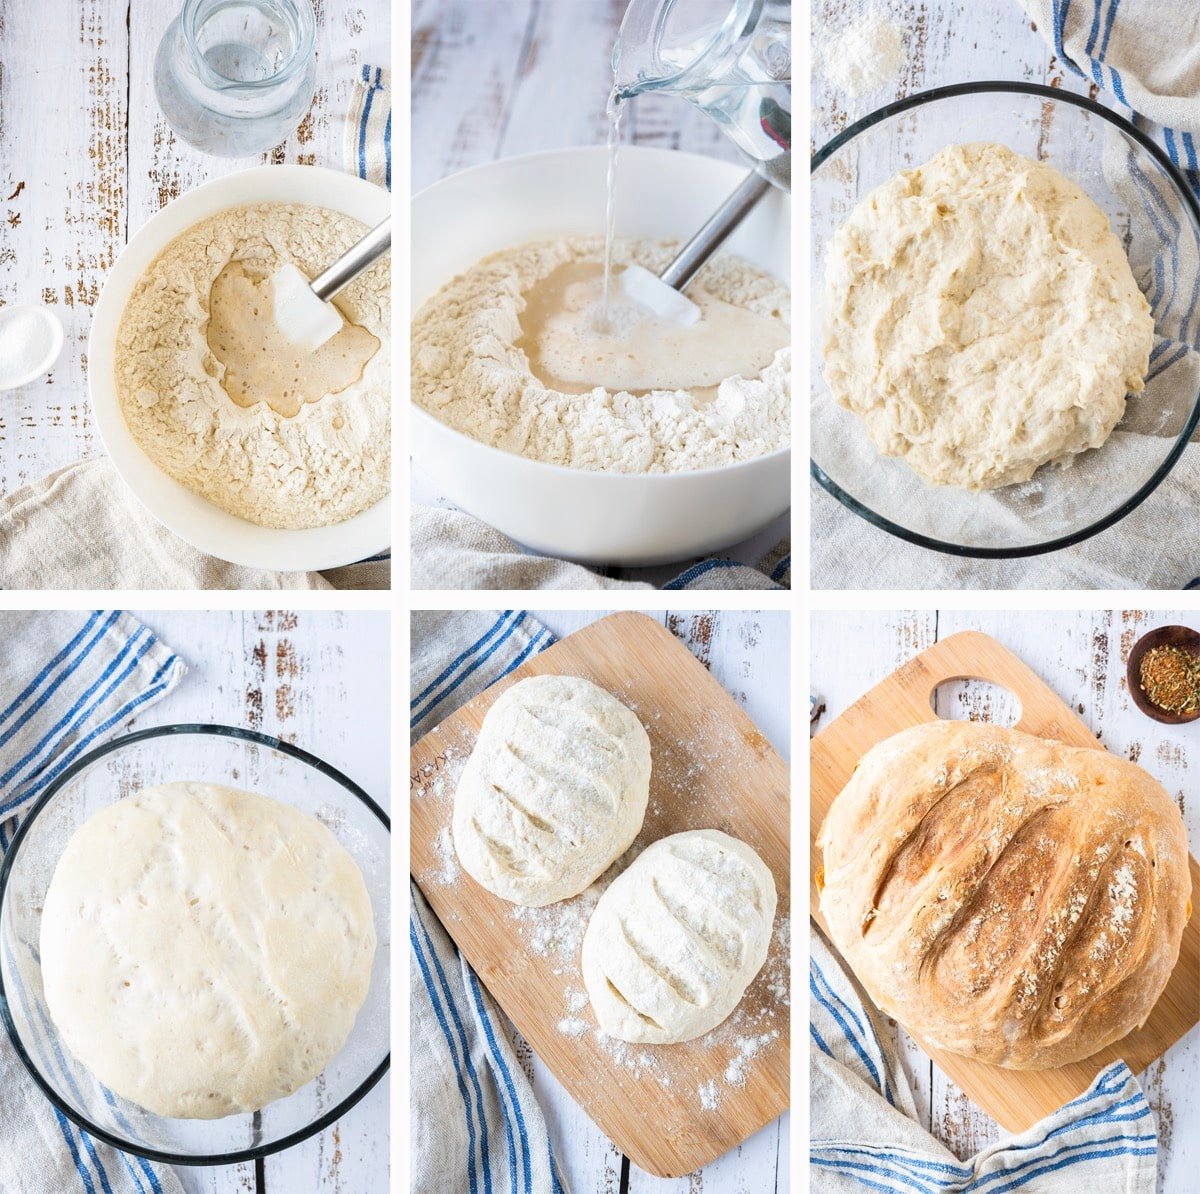 steps for making easy sourdough bread recipe